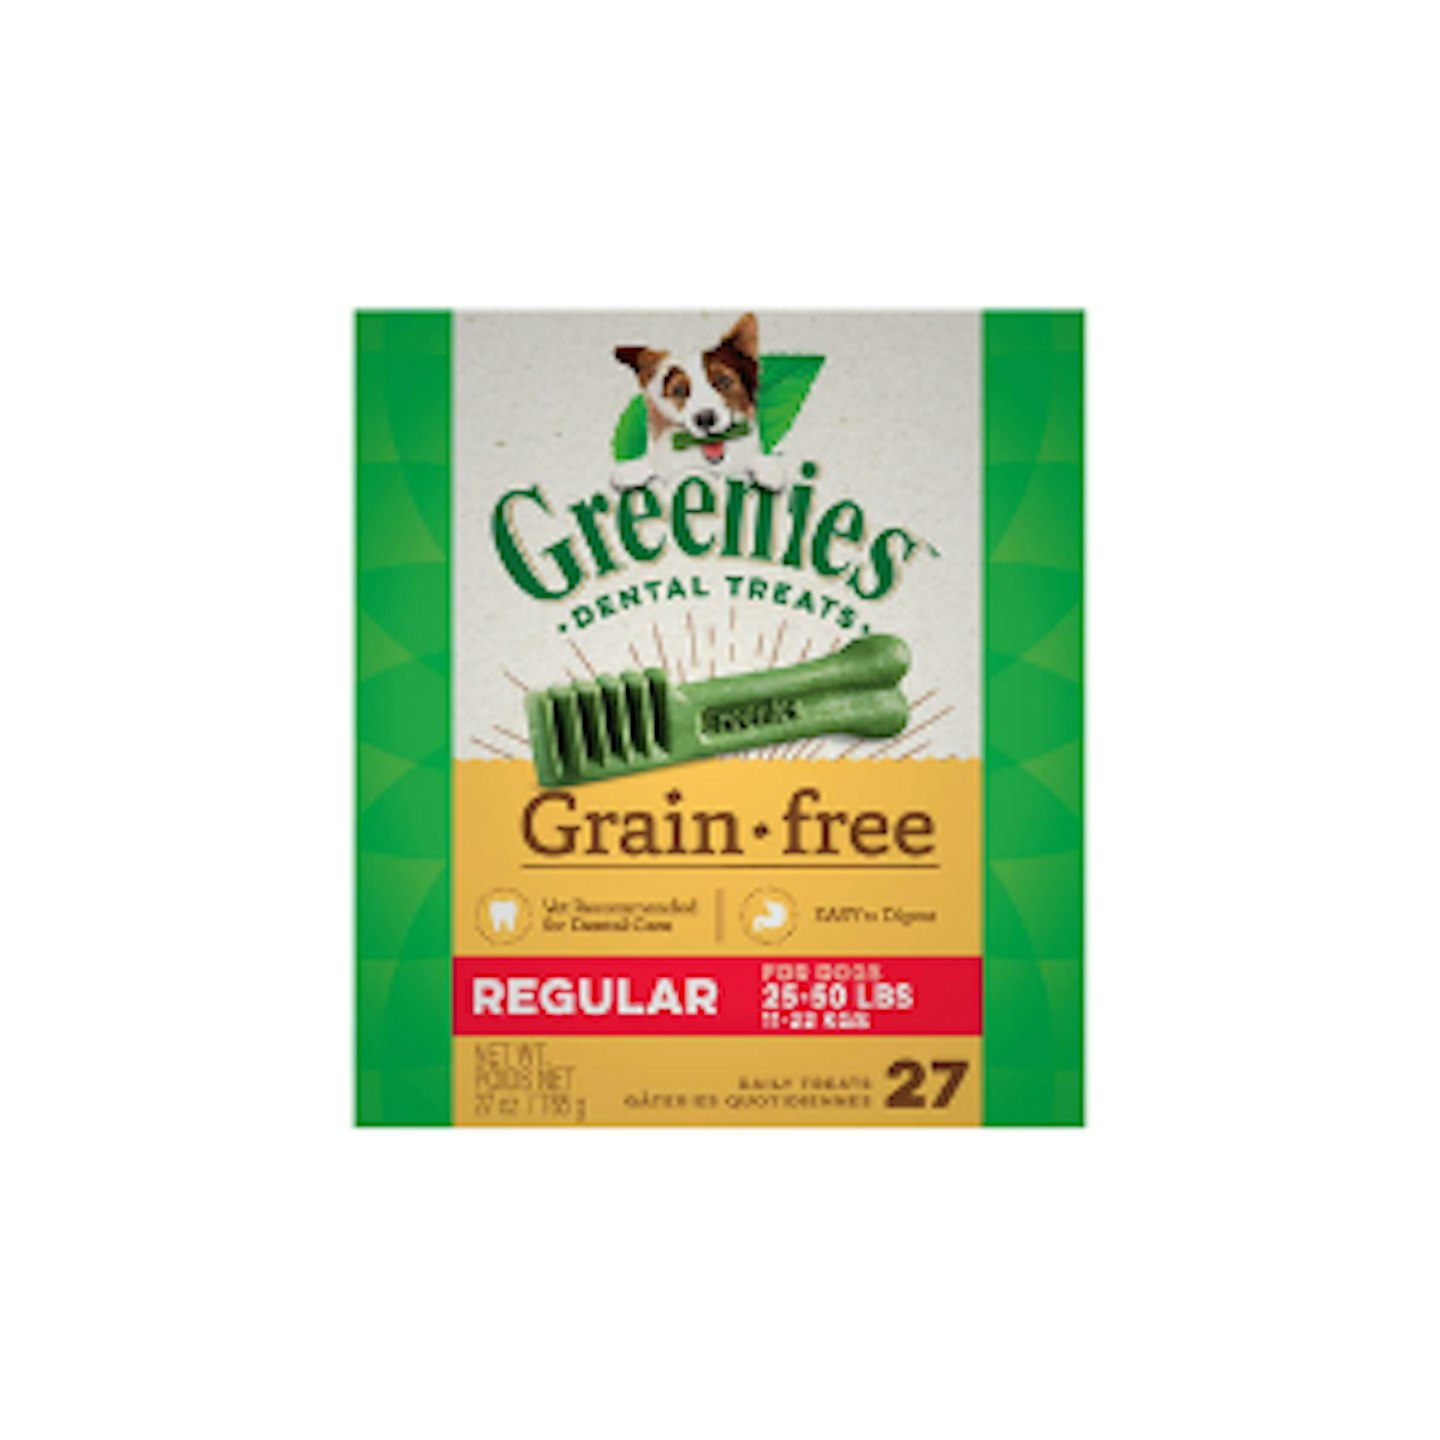 Greenies Grain Free Dental Chews Regular Treats for Dogs